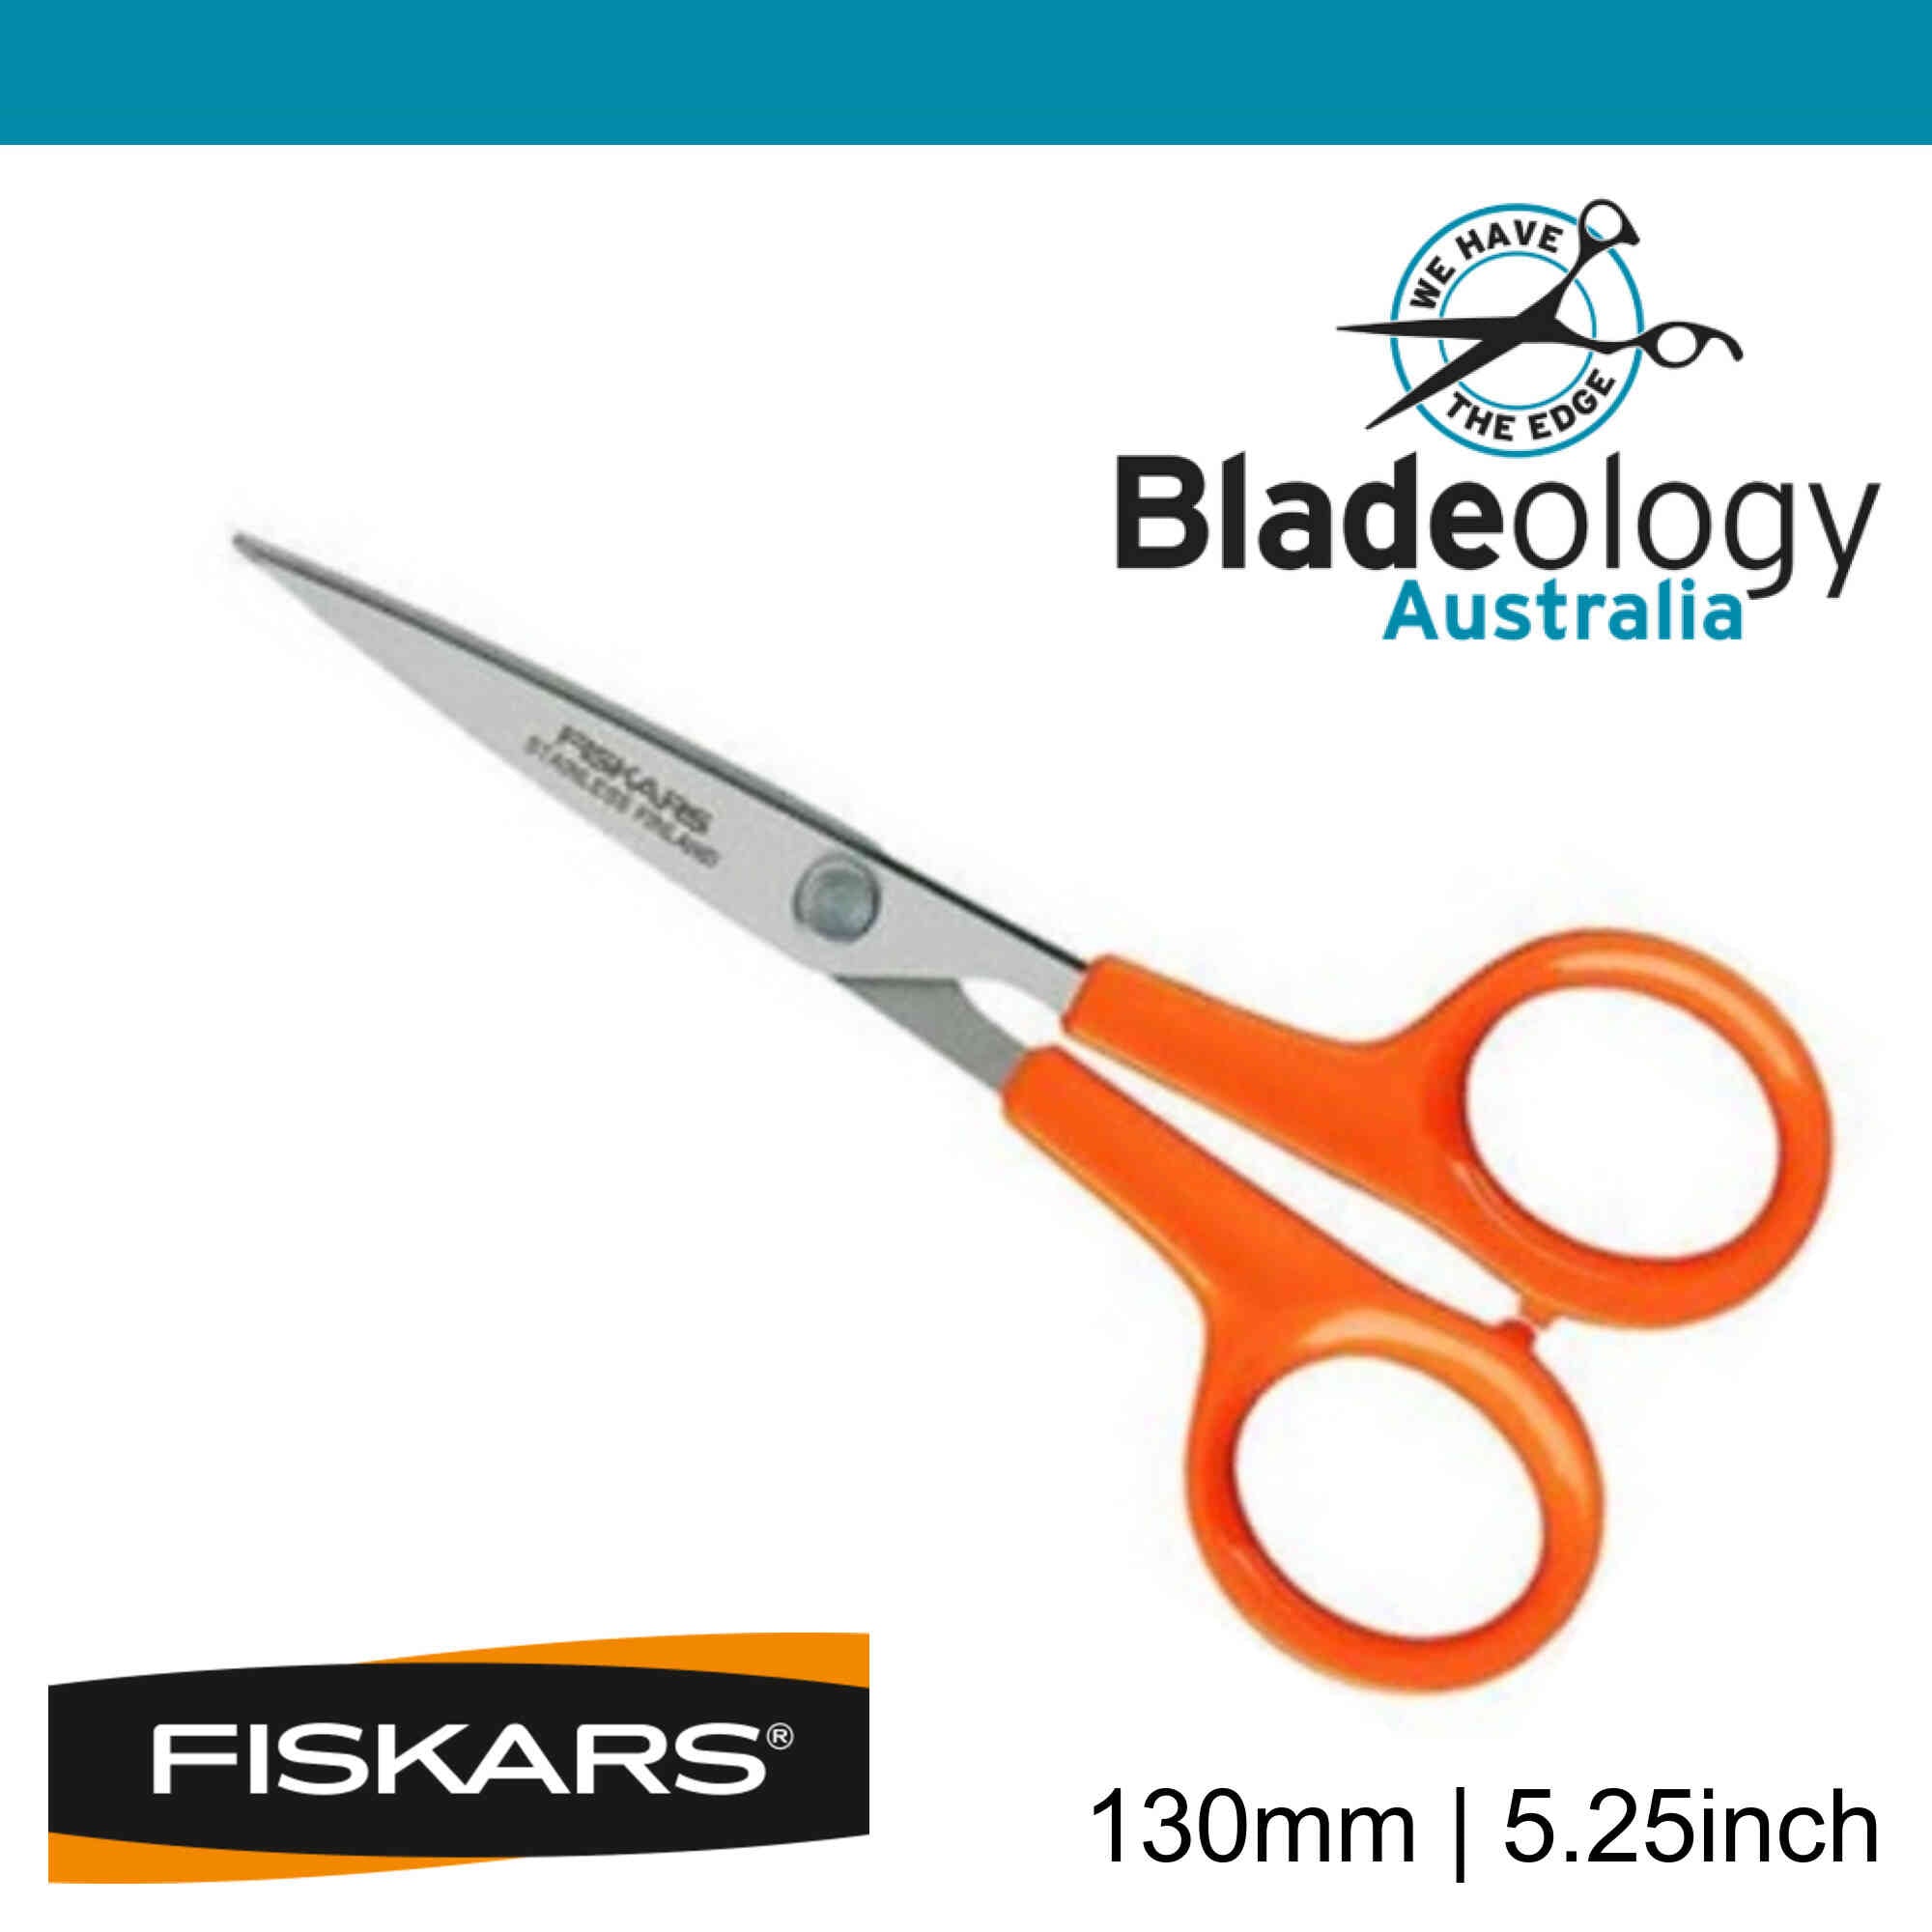 Fiskars 130mm Needlework scissors